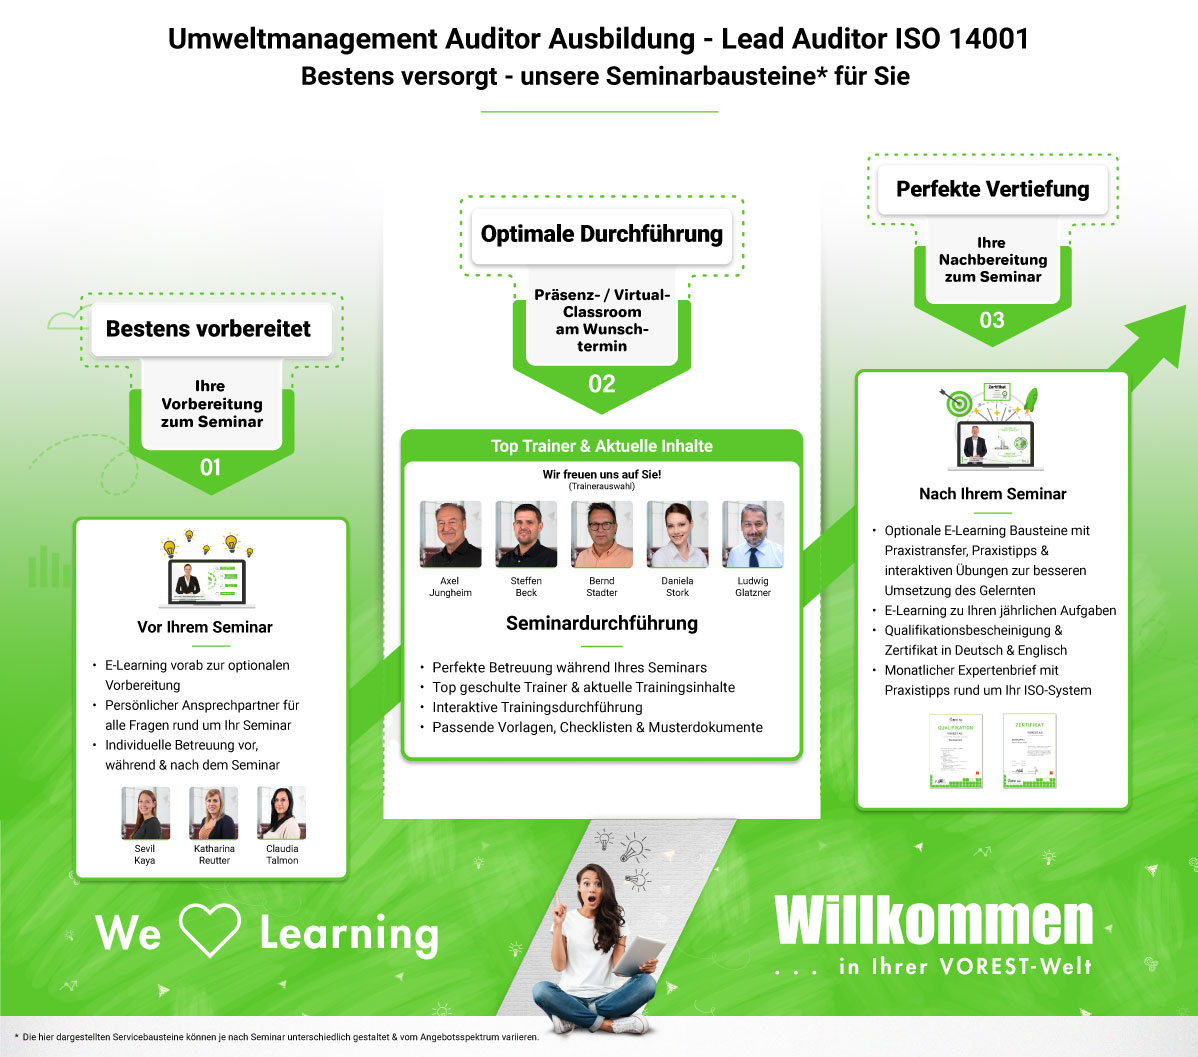 Umweltmanagement Auditor Ausbildung - Lead Auditor ISO 14001